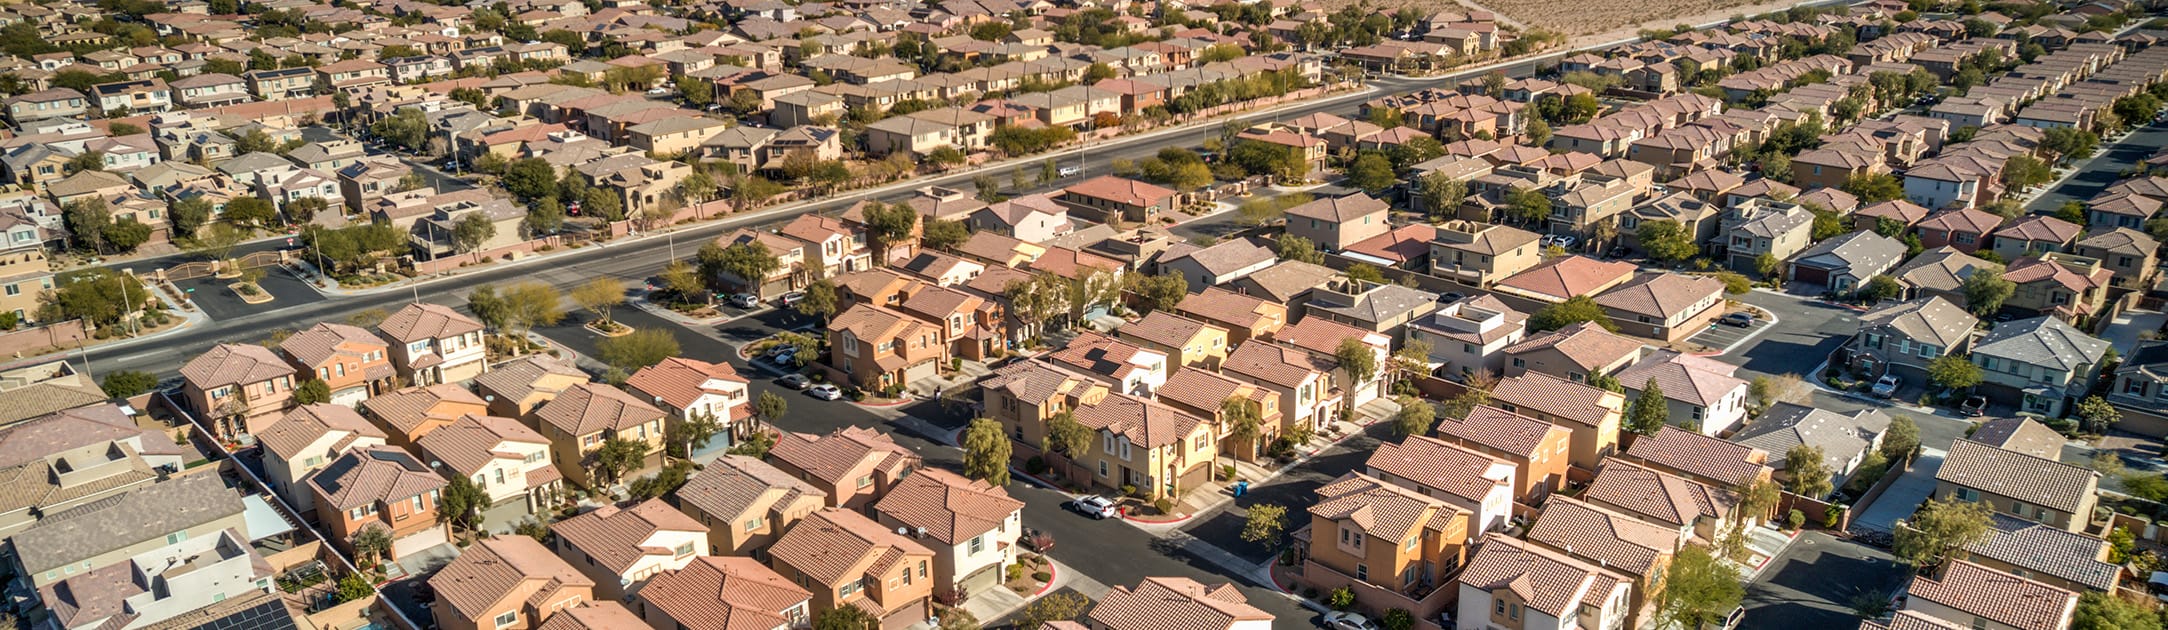 Aerial view of a neighborhood.